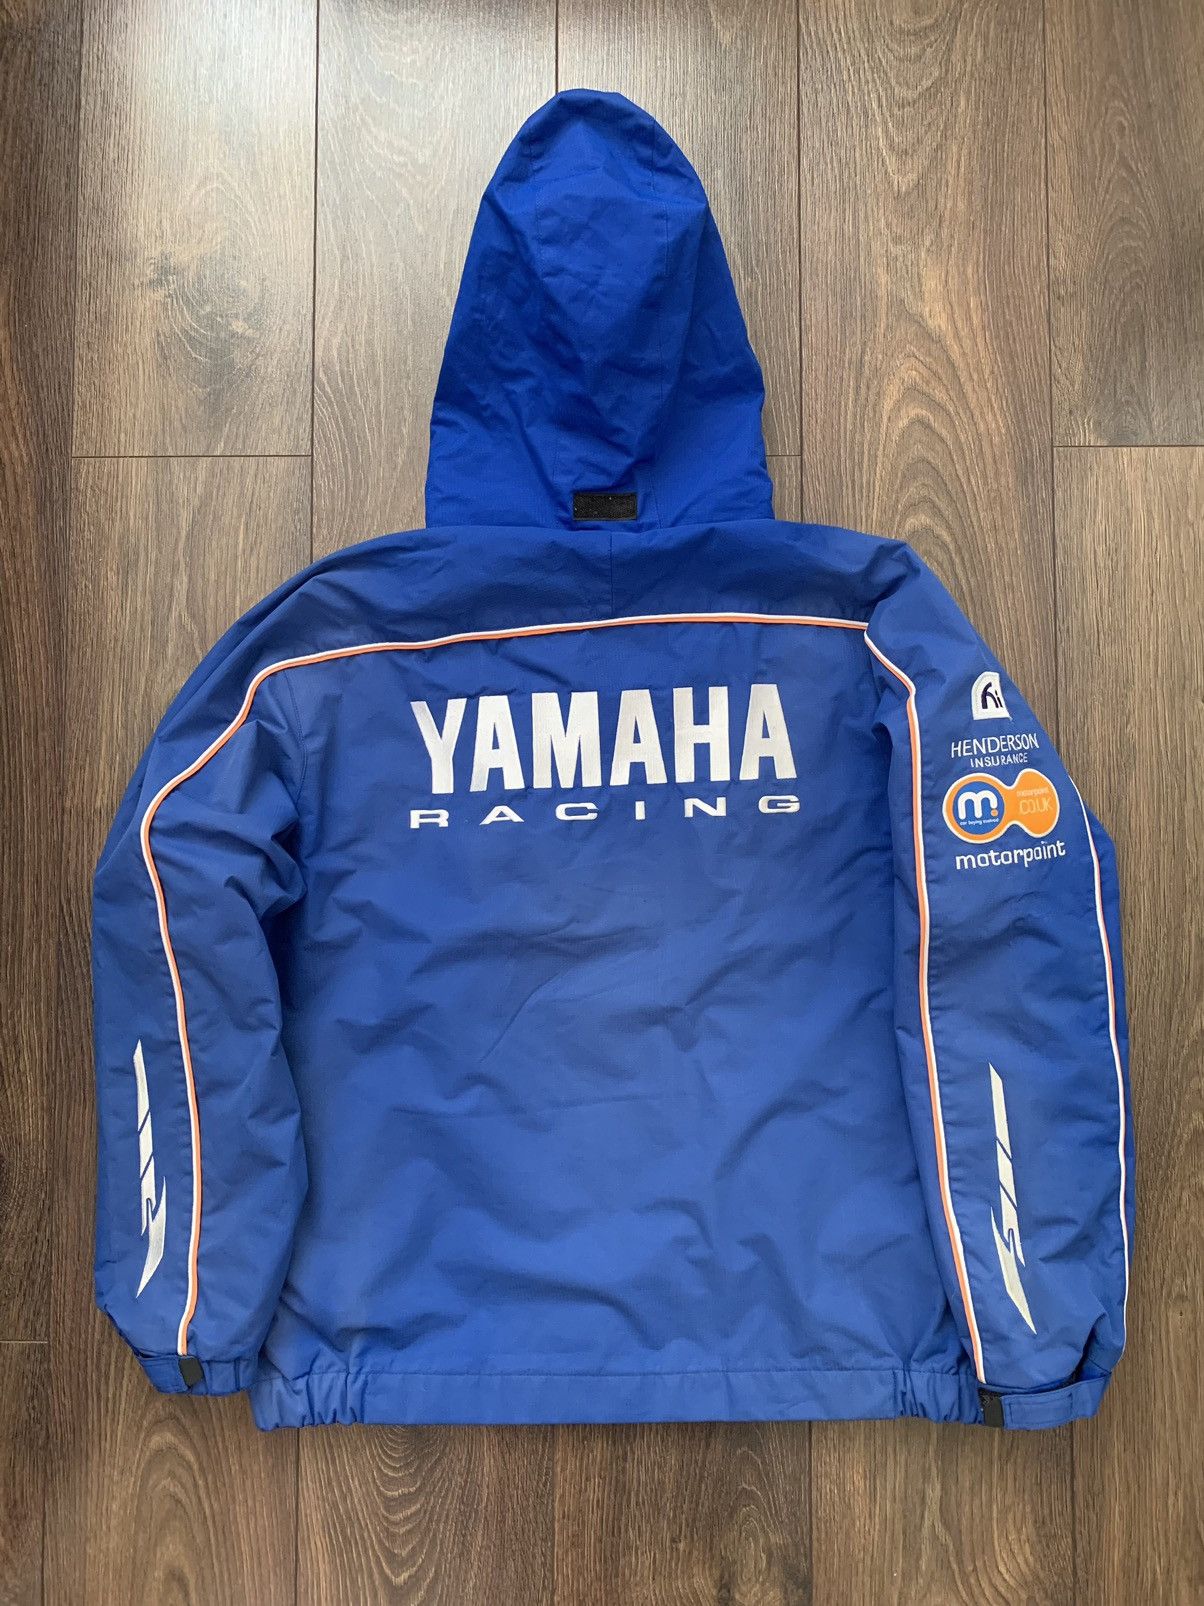 Yamaha Vintage Yamaha Racing jacket | Grailed